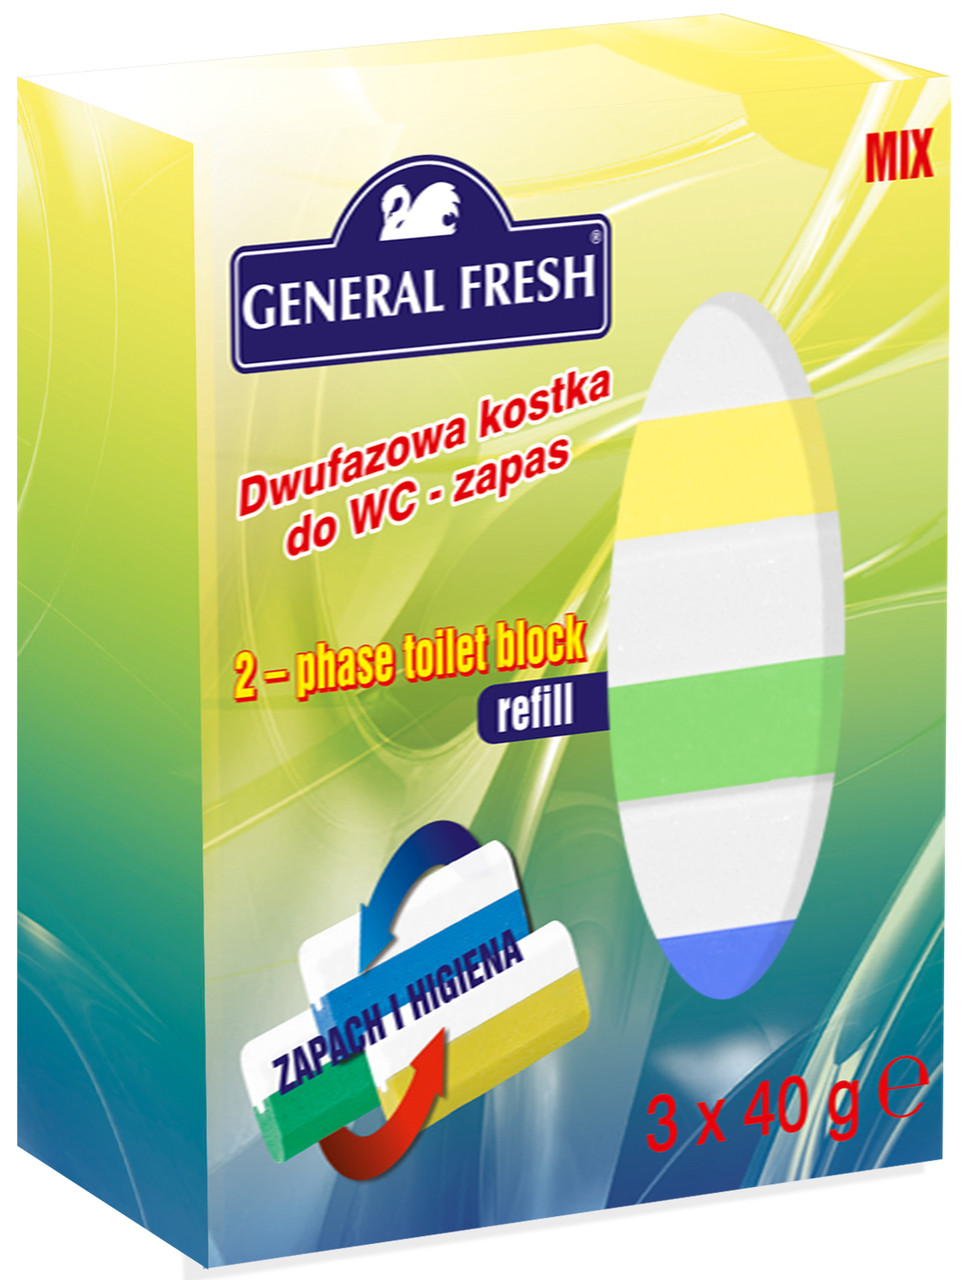 Двухкомпонентный ароматический вкладыш к "Dwufazowa KOSTKA do WC" (3*40 гр) General Fresh Микс